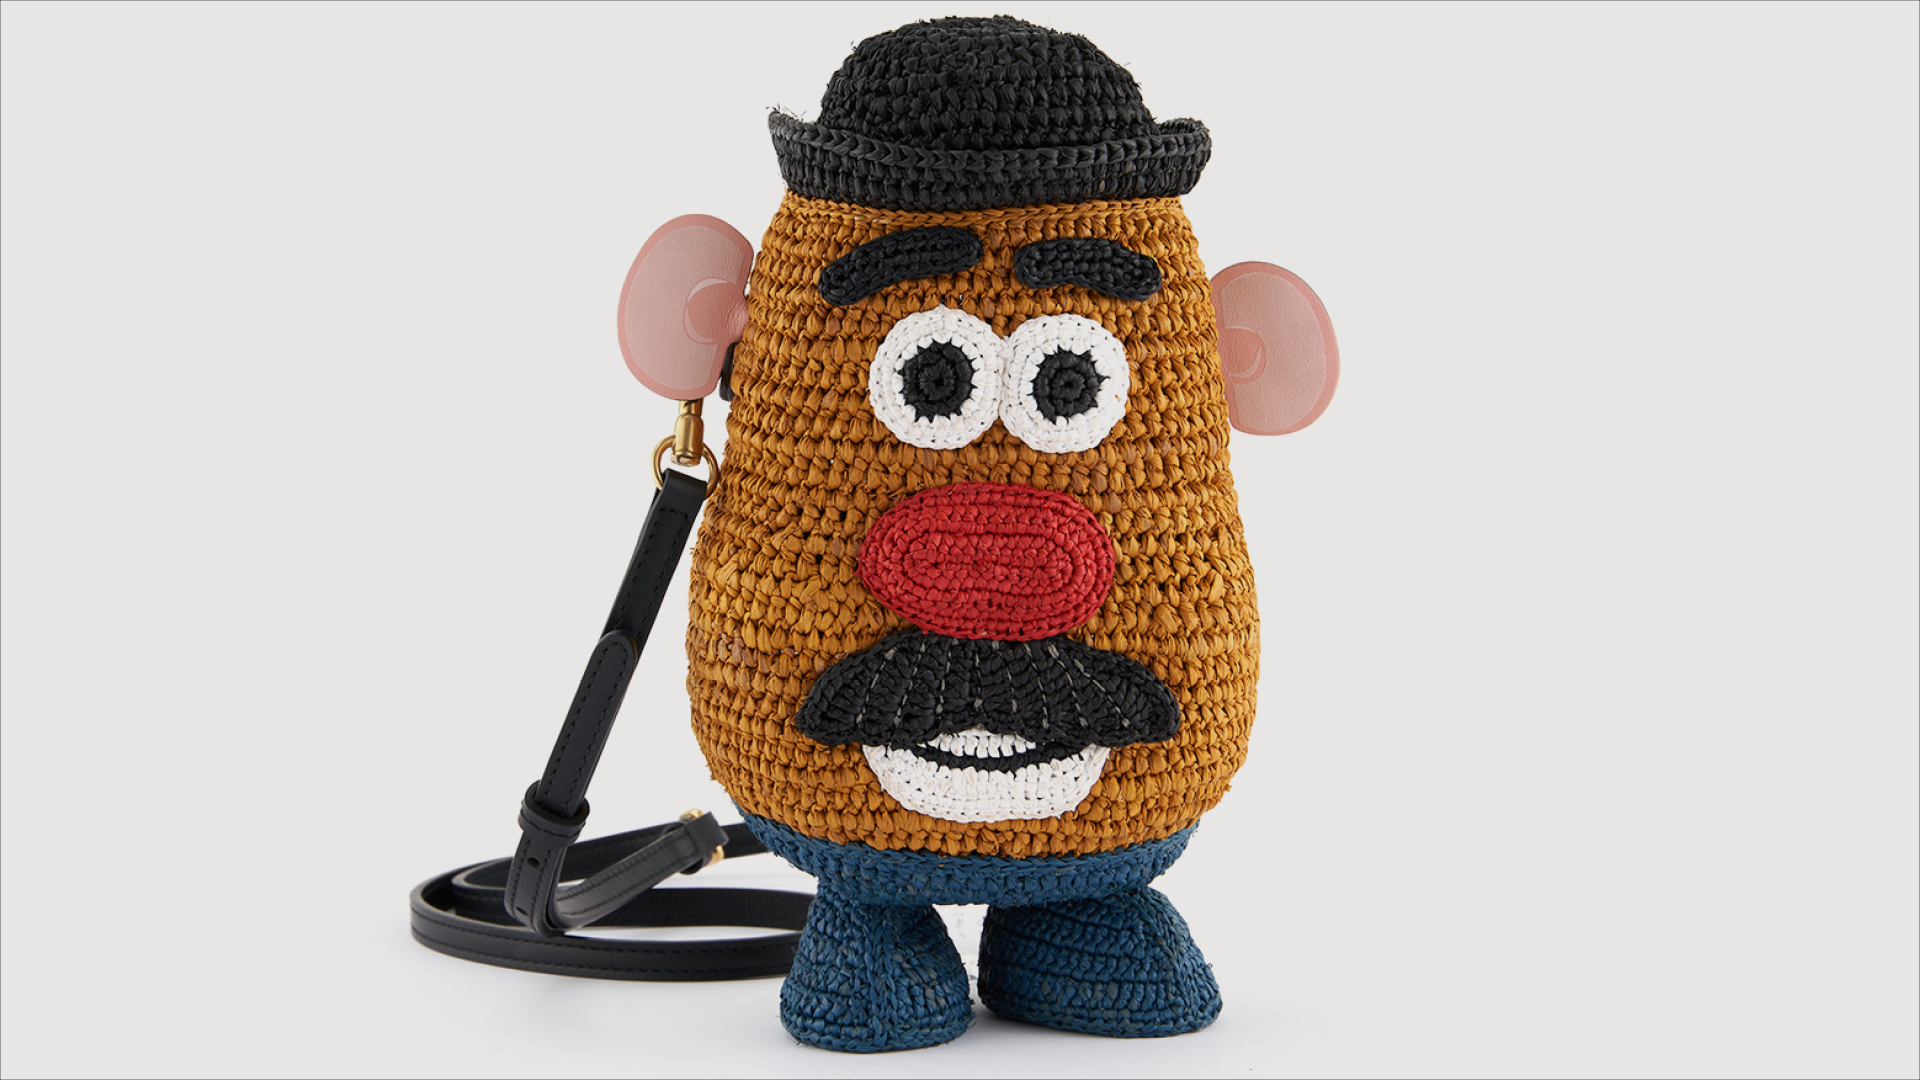 Mr Potato Head Accessories, Toy Story Mr Potato Head Luggage Tag